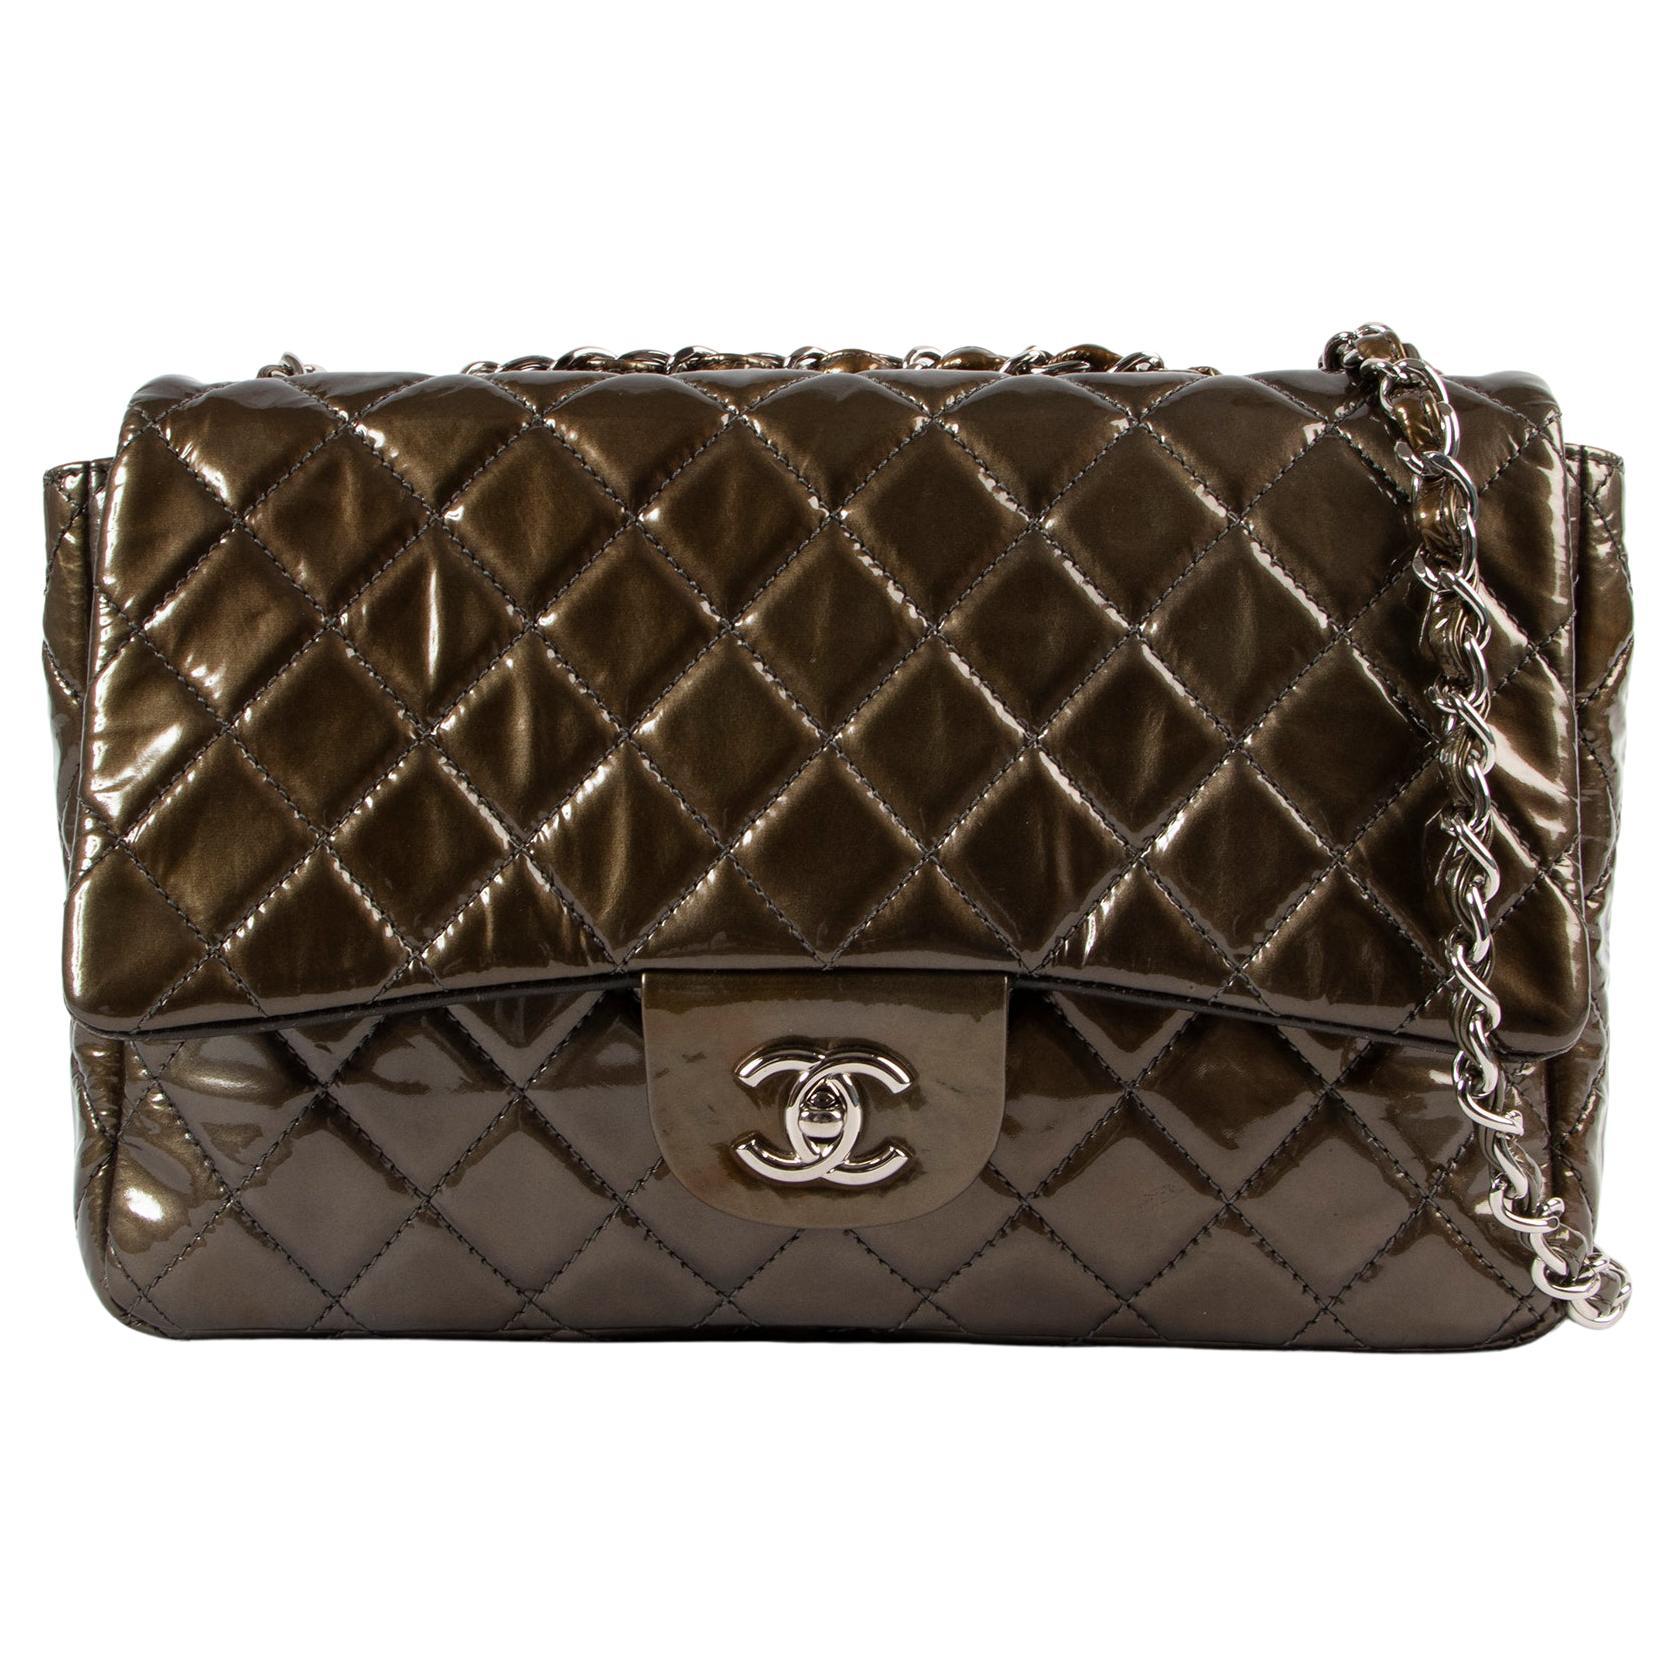 Chanel Olive Green Jumbo Classic Flap Patent Leather Handbag at